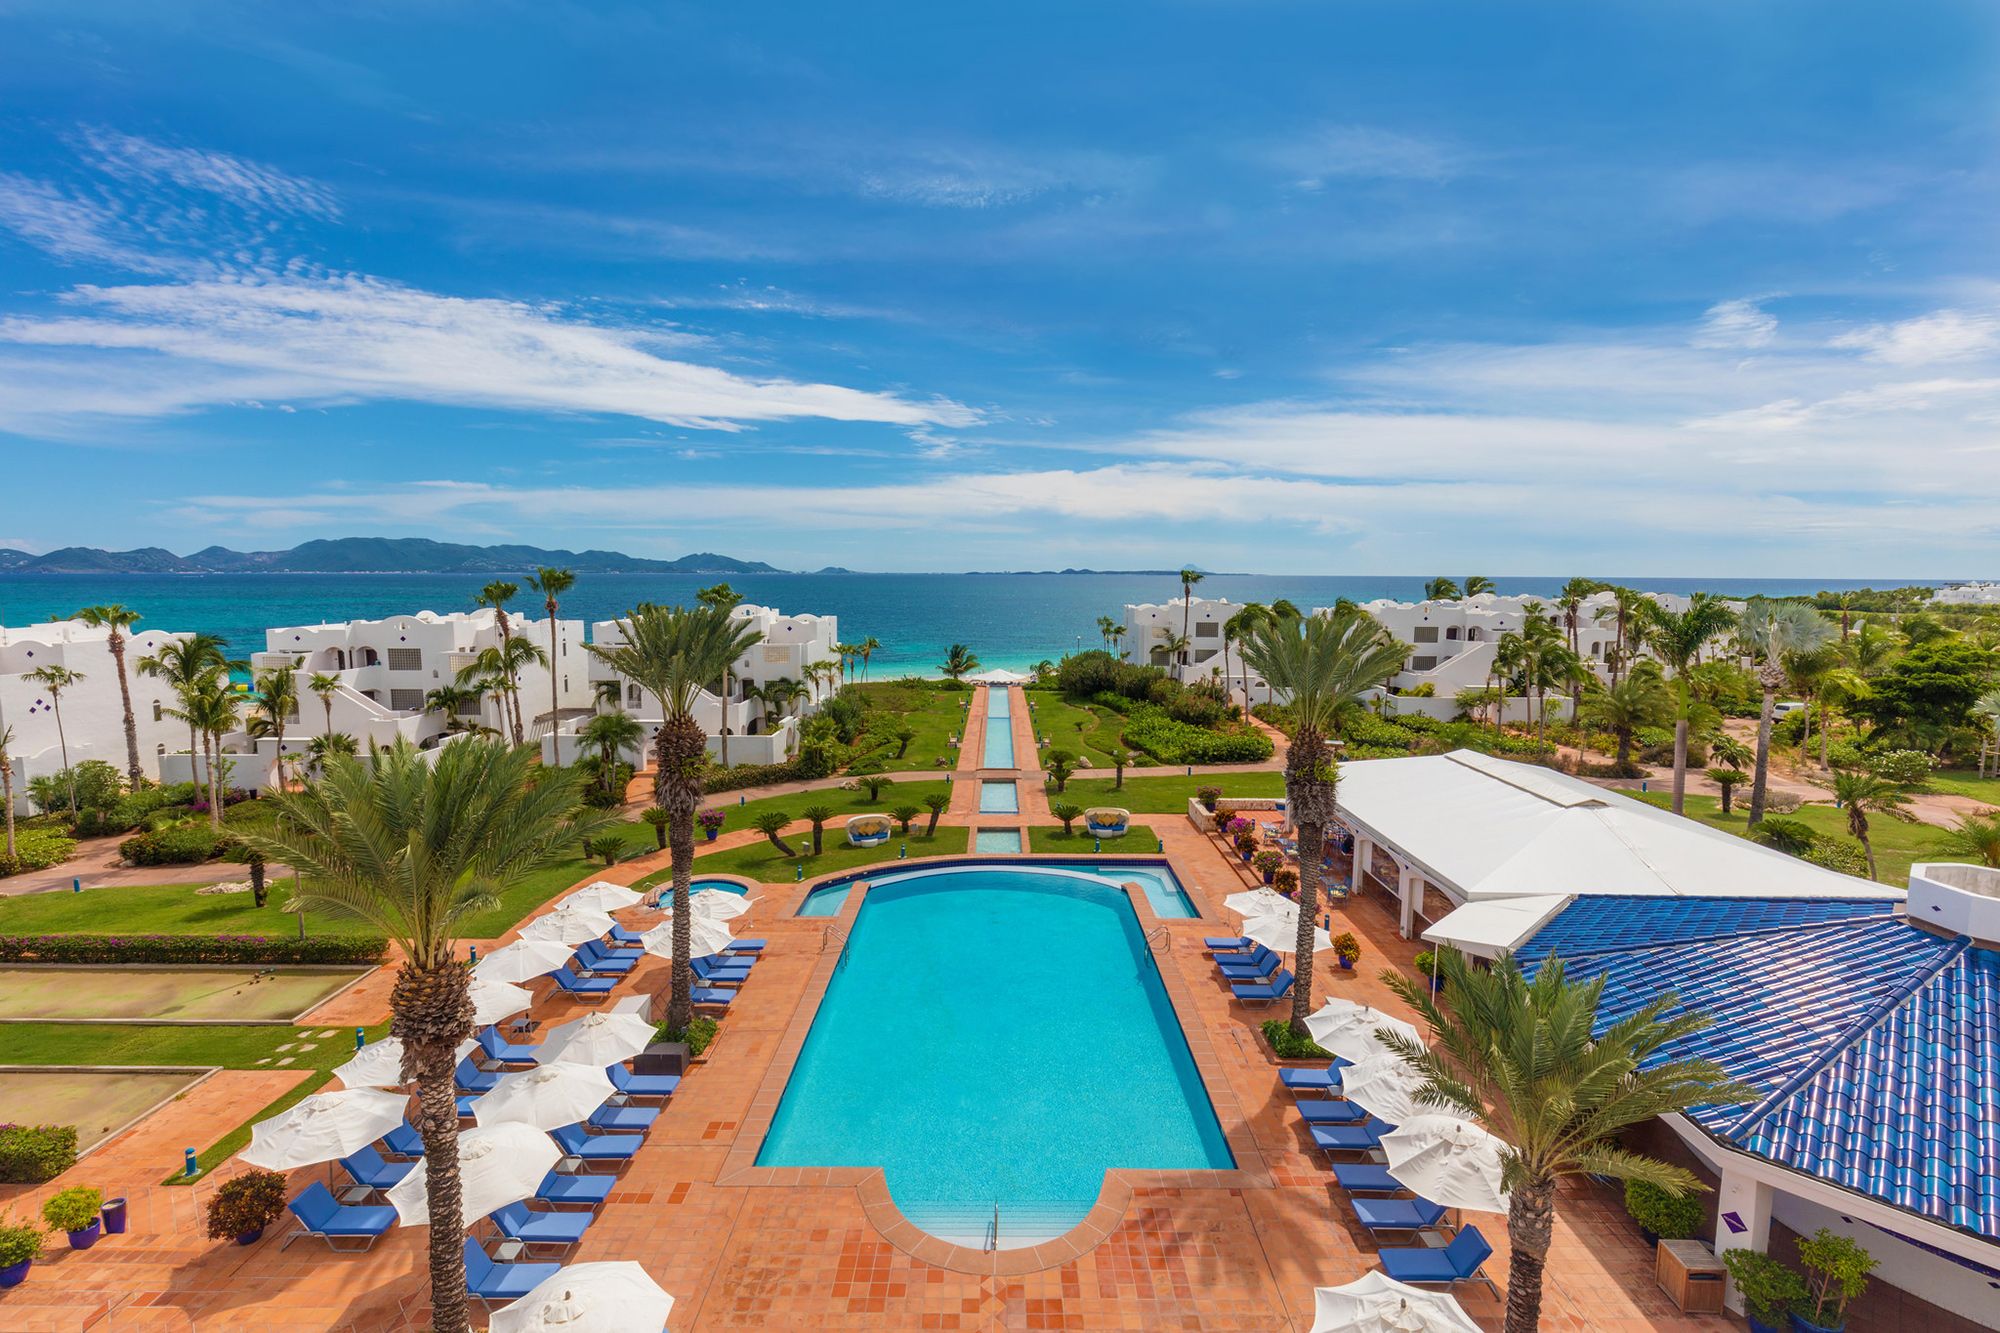 Hoteles con Piscina: 10 Mejores del Caribe 7